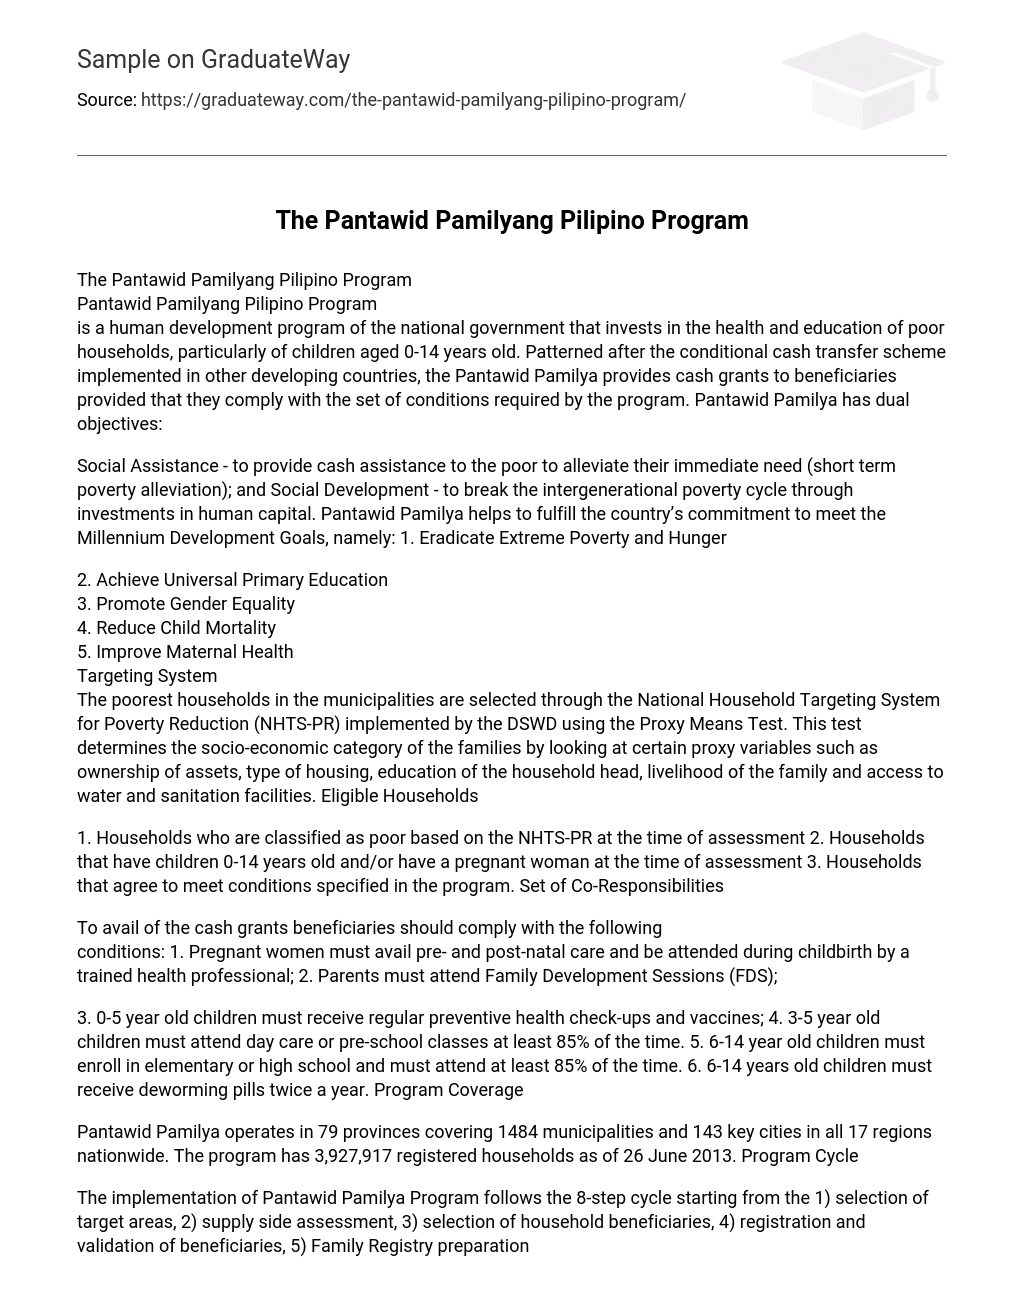 The Pantawid Pamilyang Pilipino Program